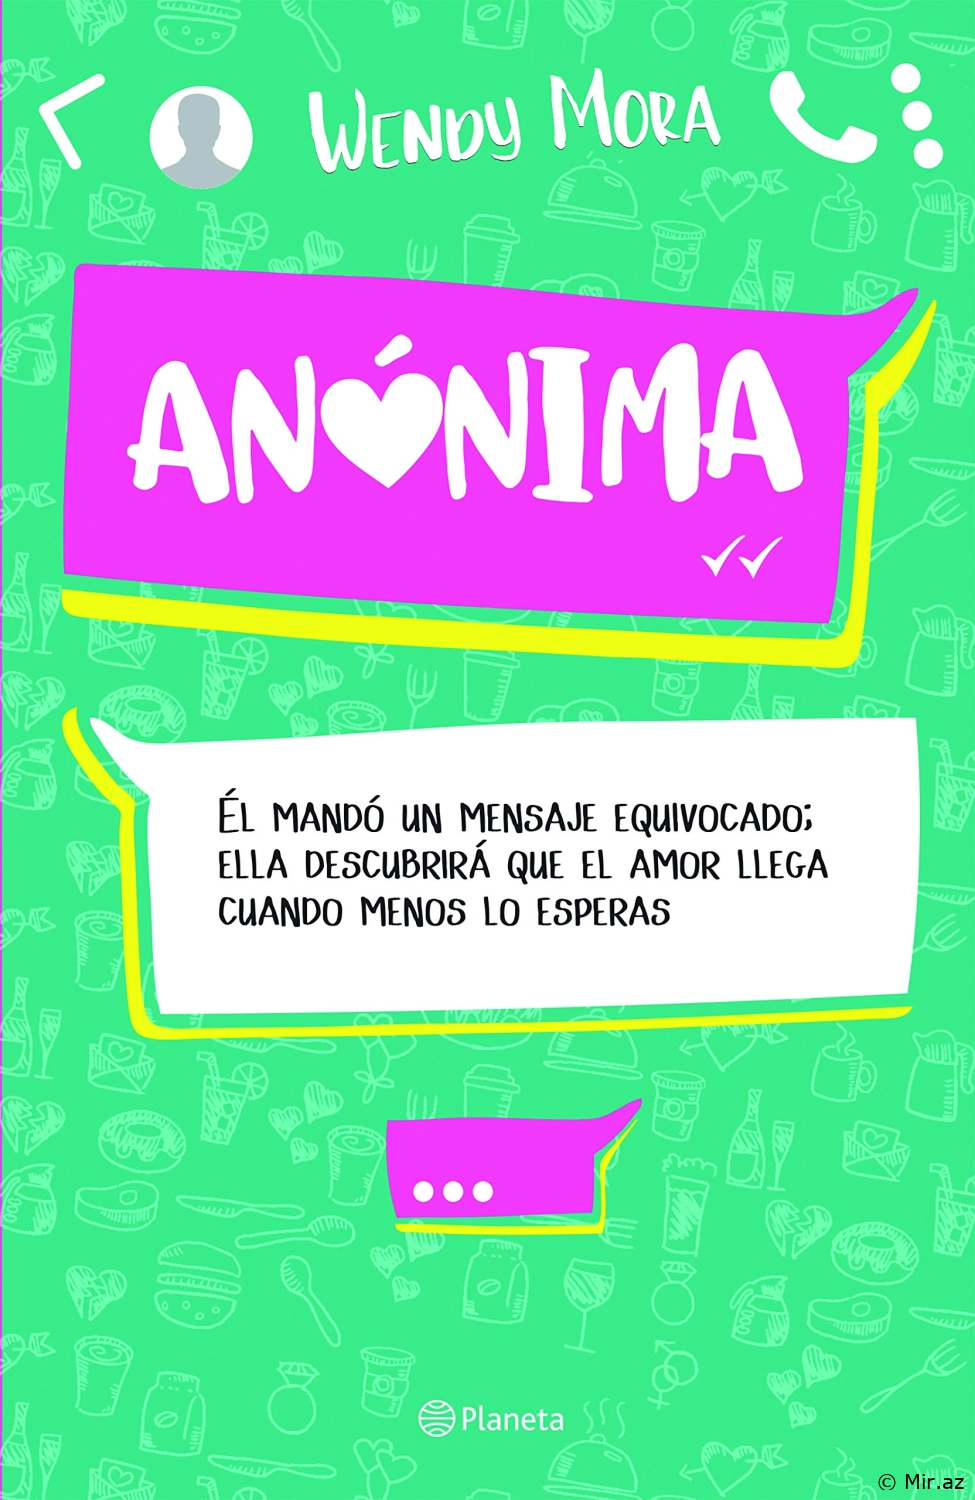 Wendy Mora "Anónima" PDF